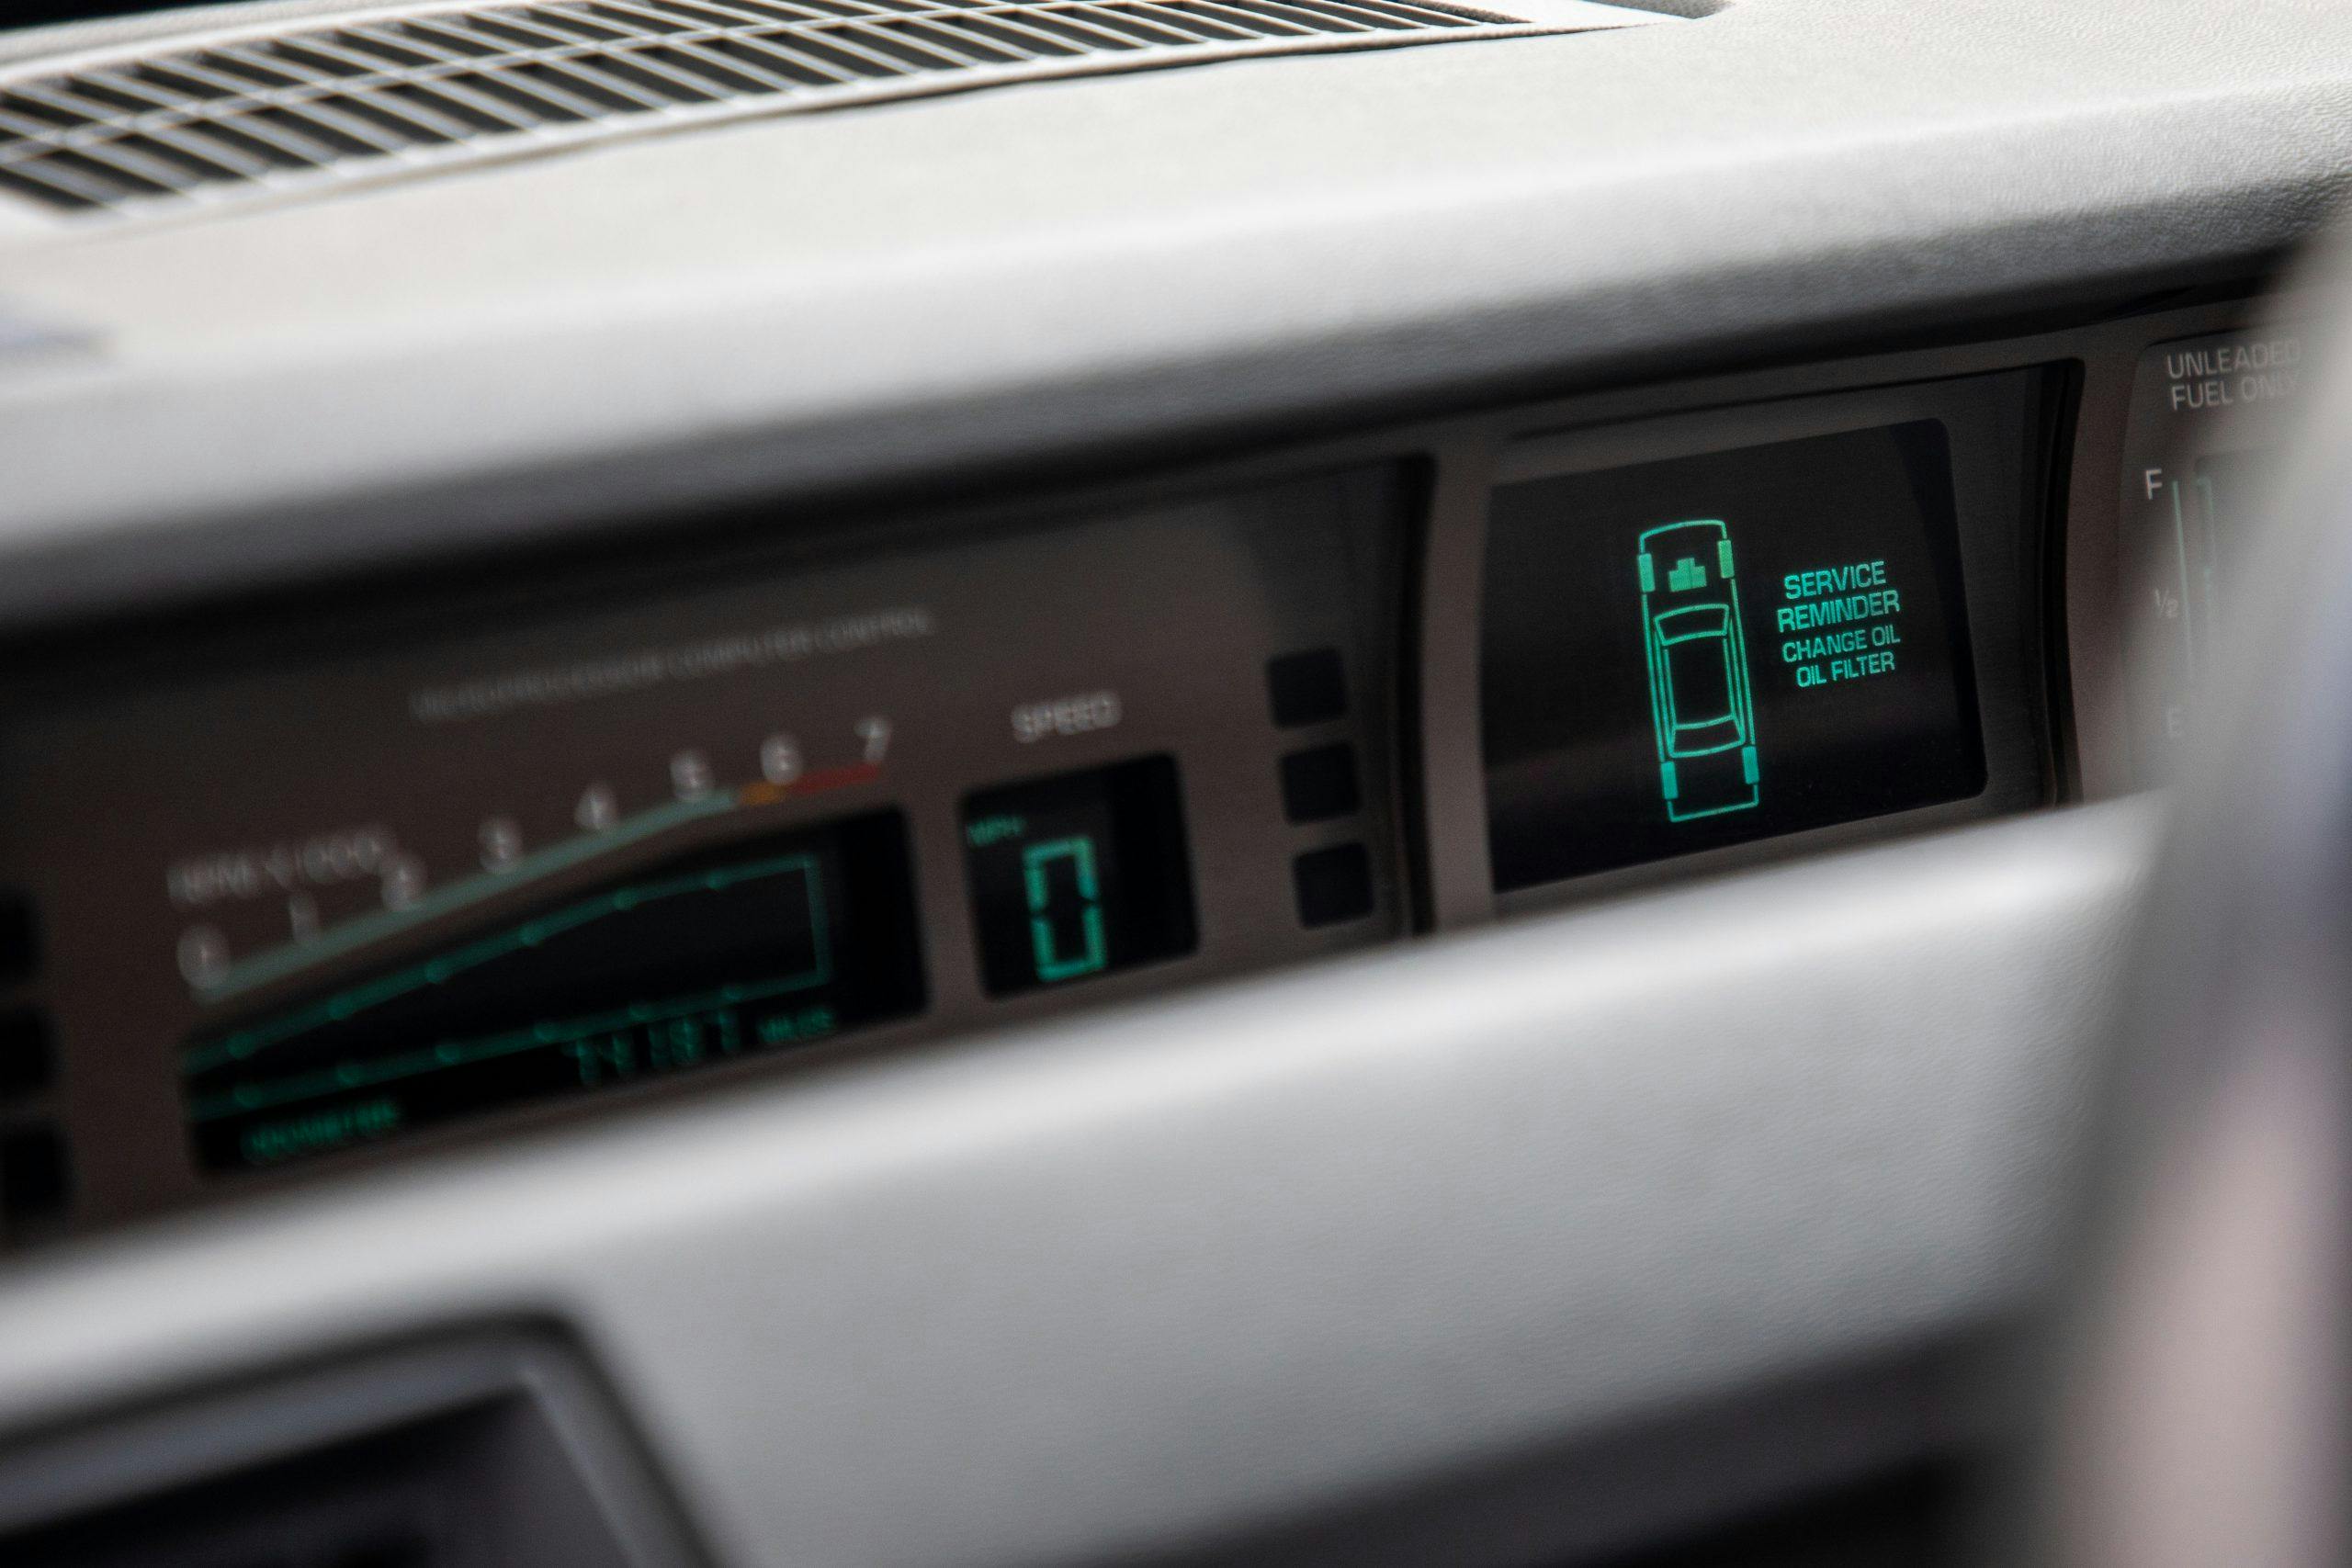 1989 Pontiac 6000STE AWD service reminder light